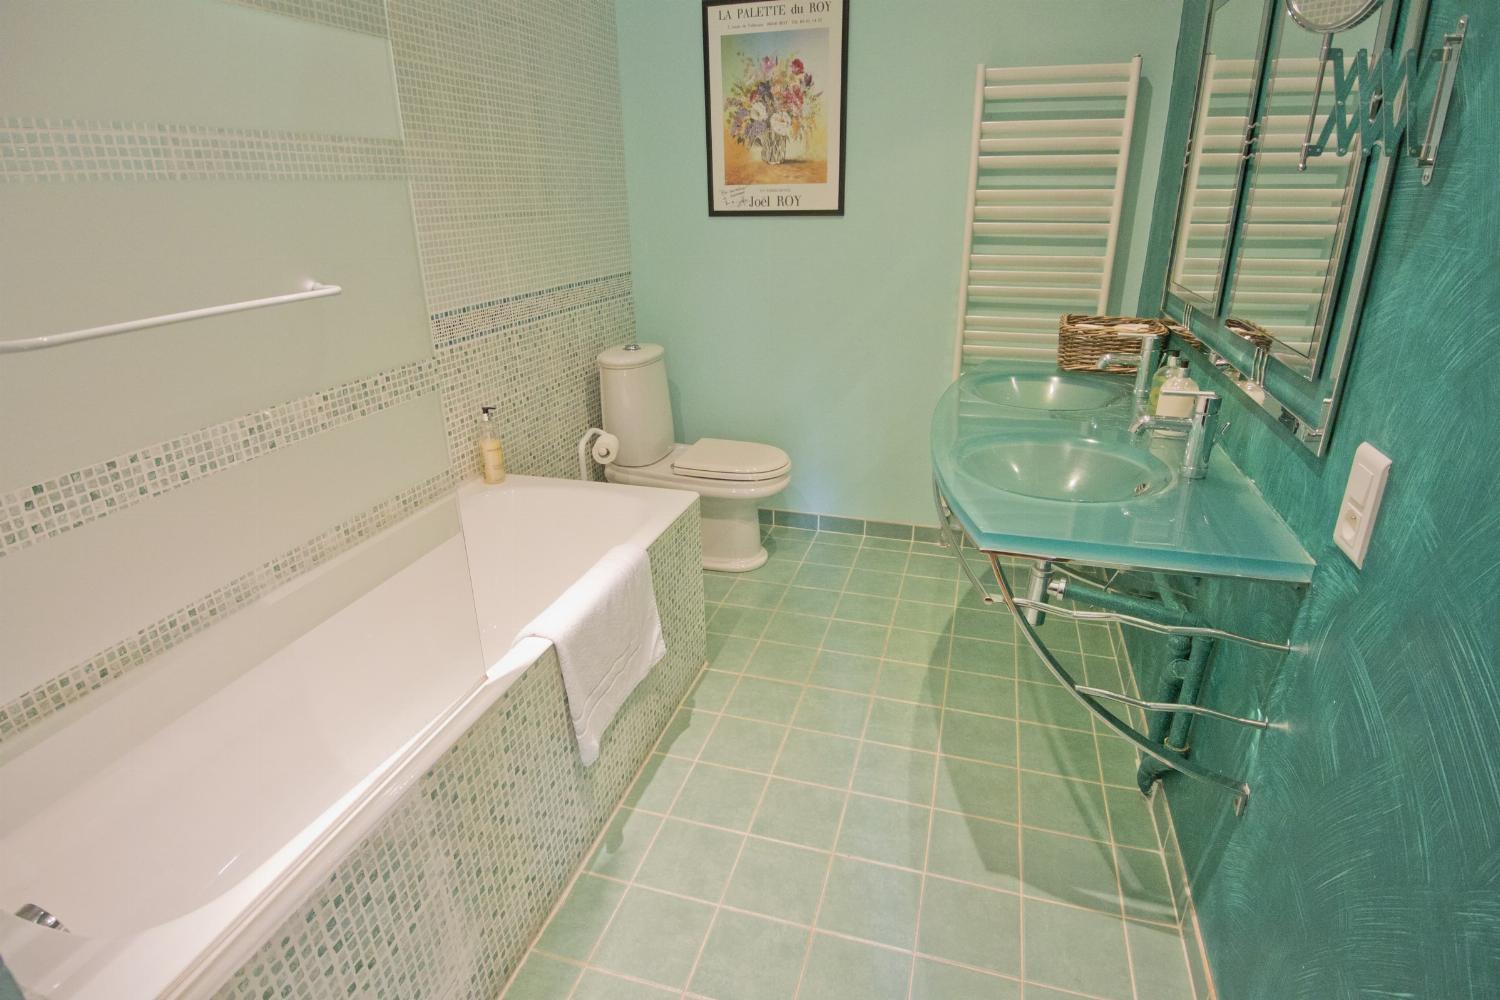 Bathroom | Holiday home in the Tarn